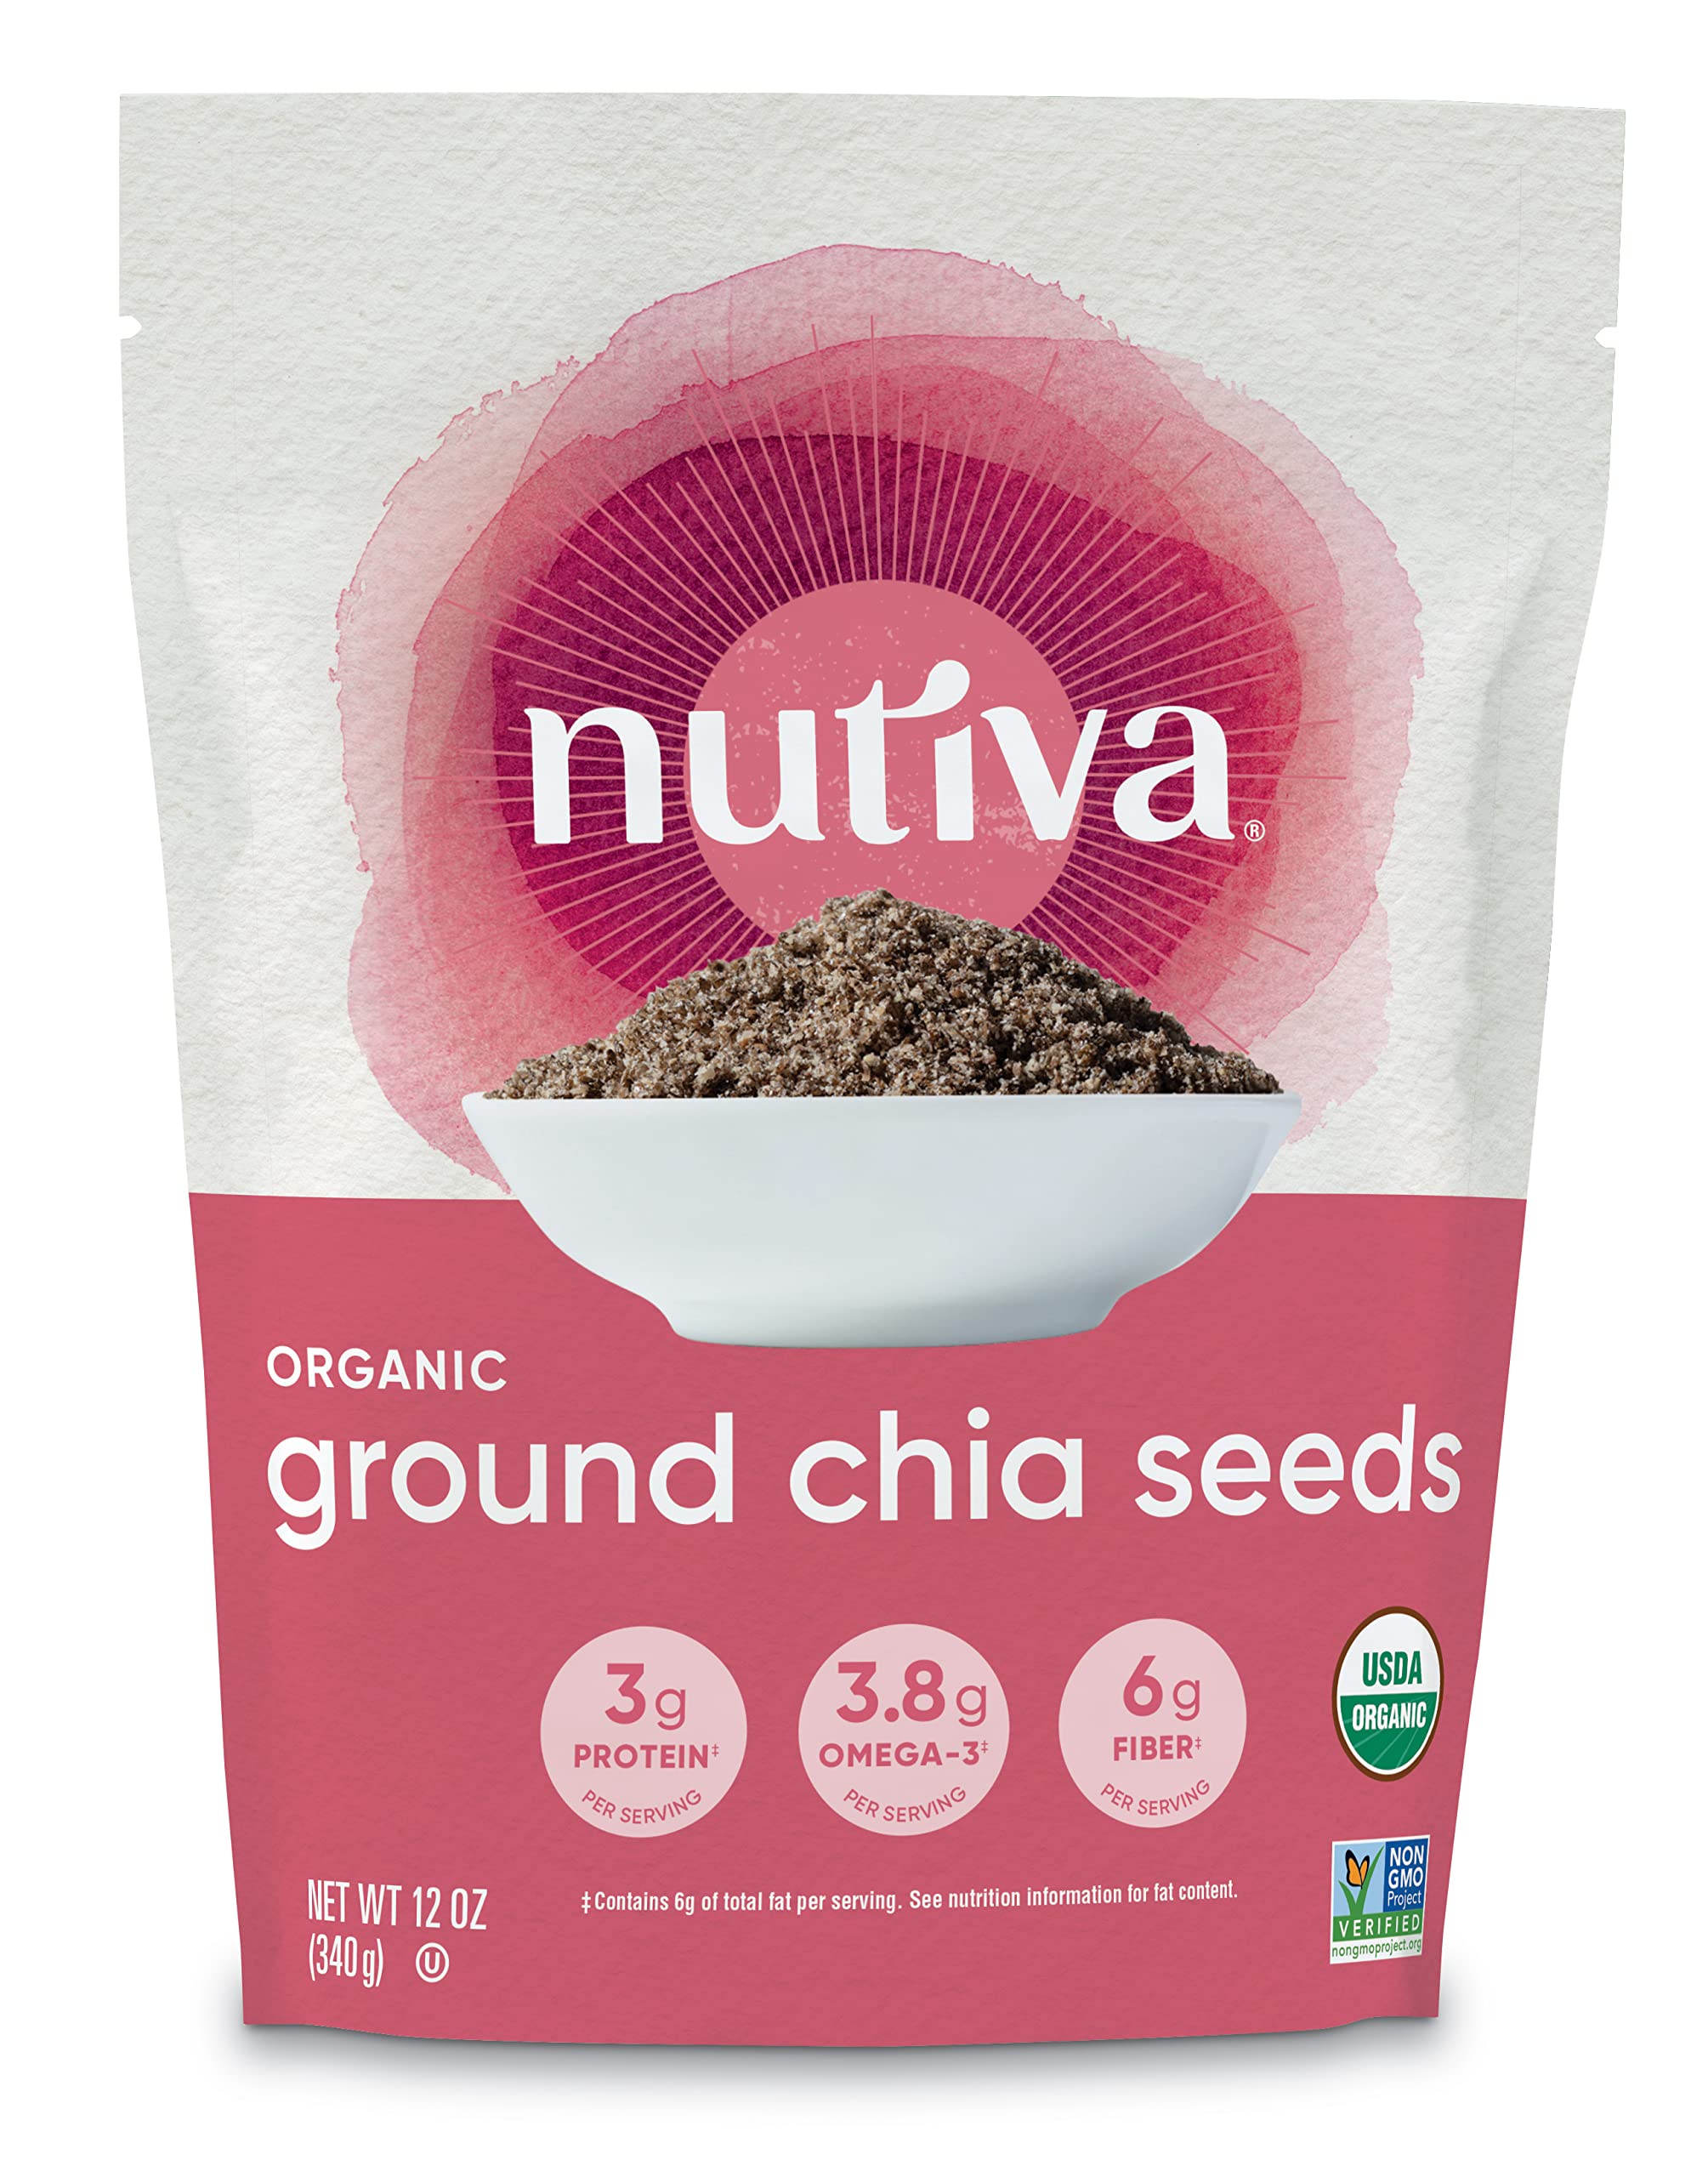 Diet info for Nutiva USDA Certified Organic, non-GMO Fair for Life